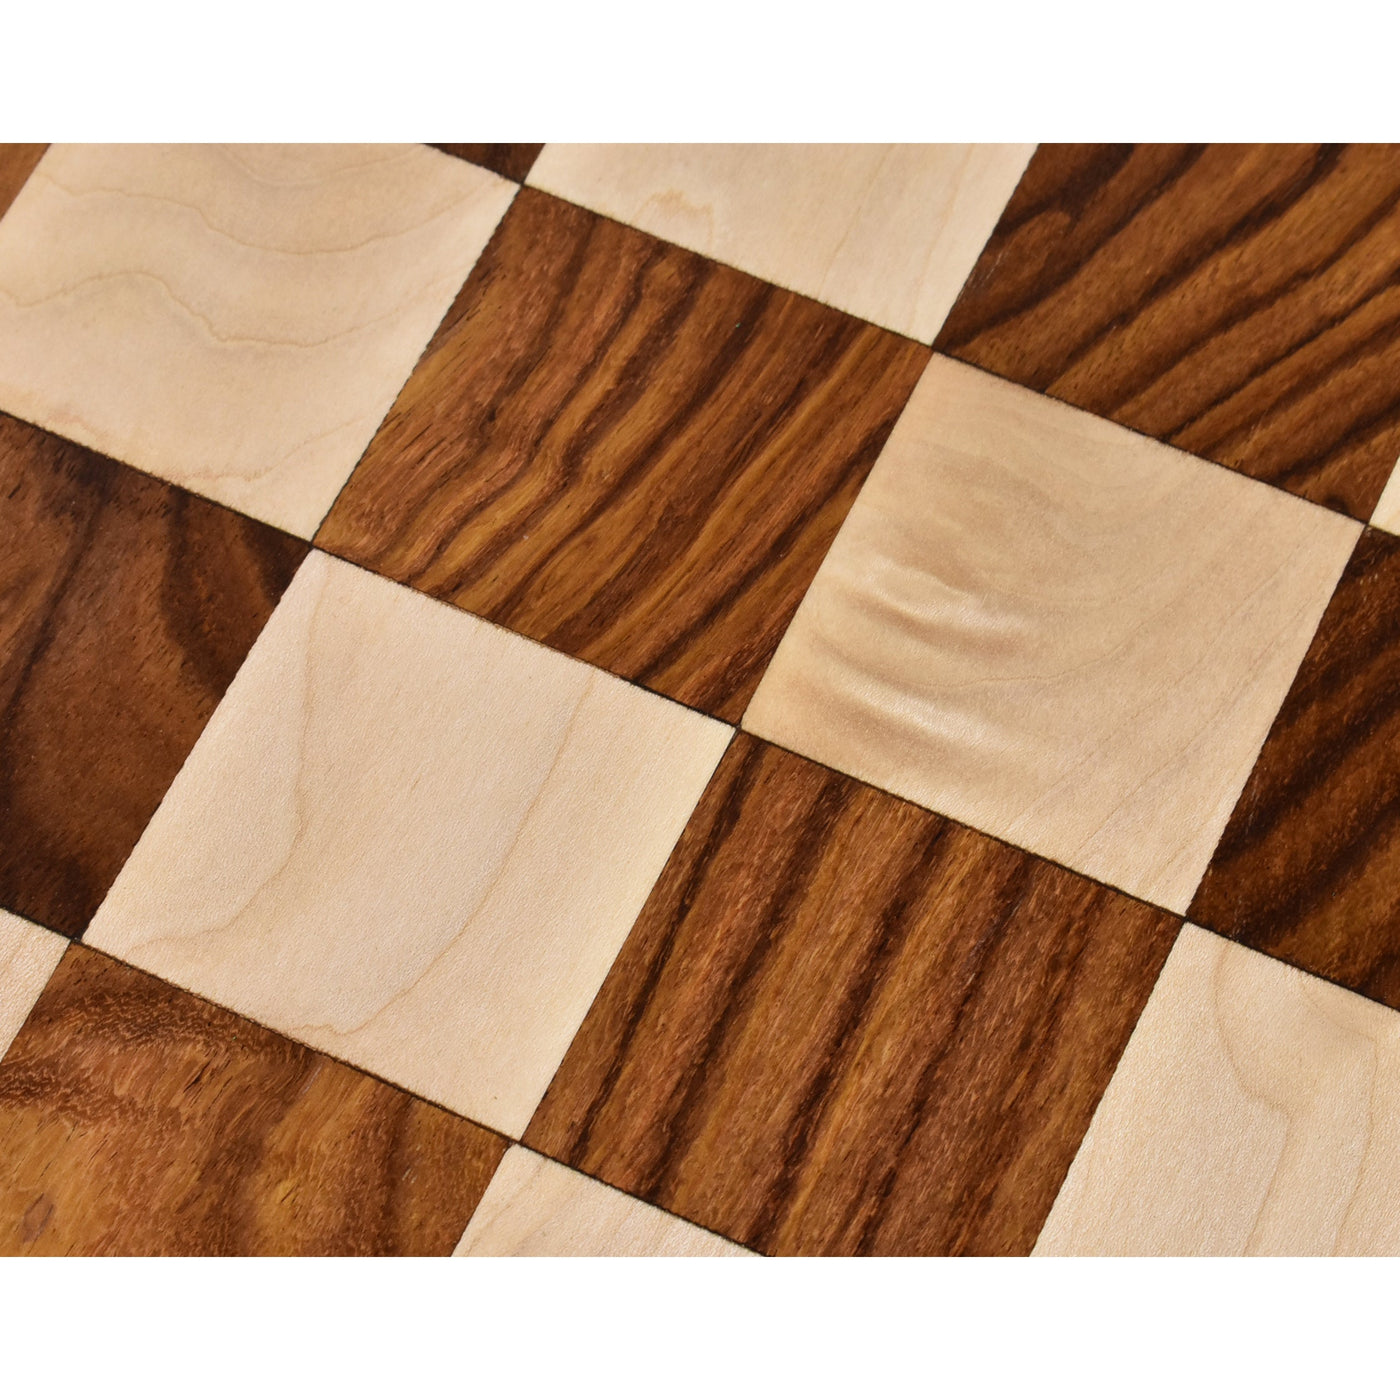 Borderless Hardwood End Grain Chess Board